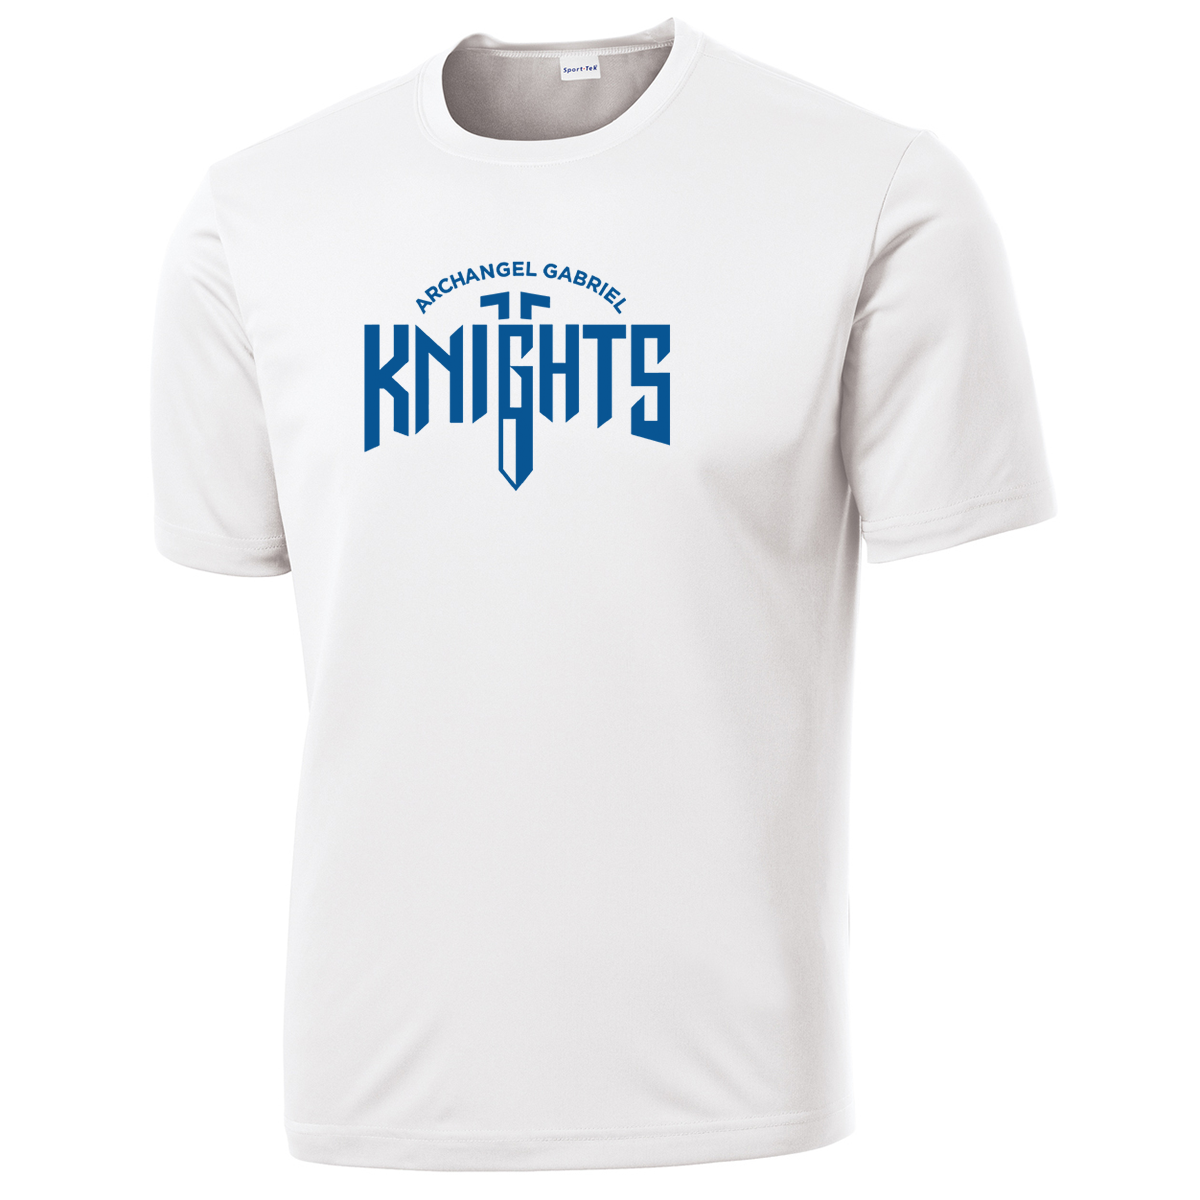 Archbishop Gabriel Knights Performance T-Shirt